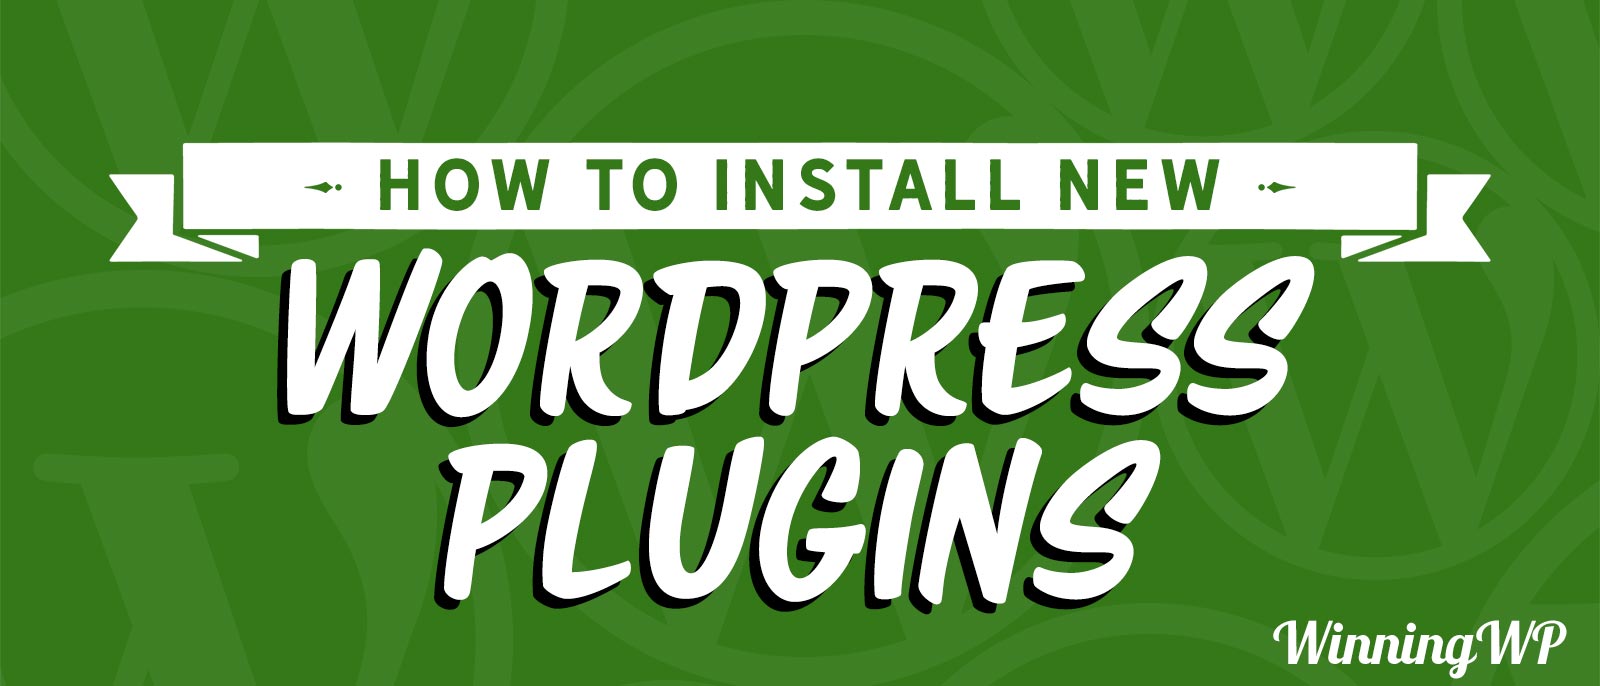 How to Install WordPress Plugins